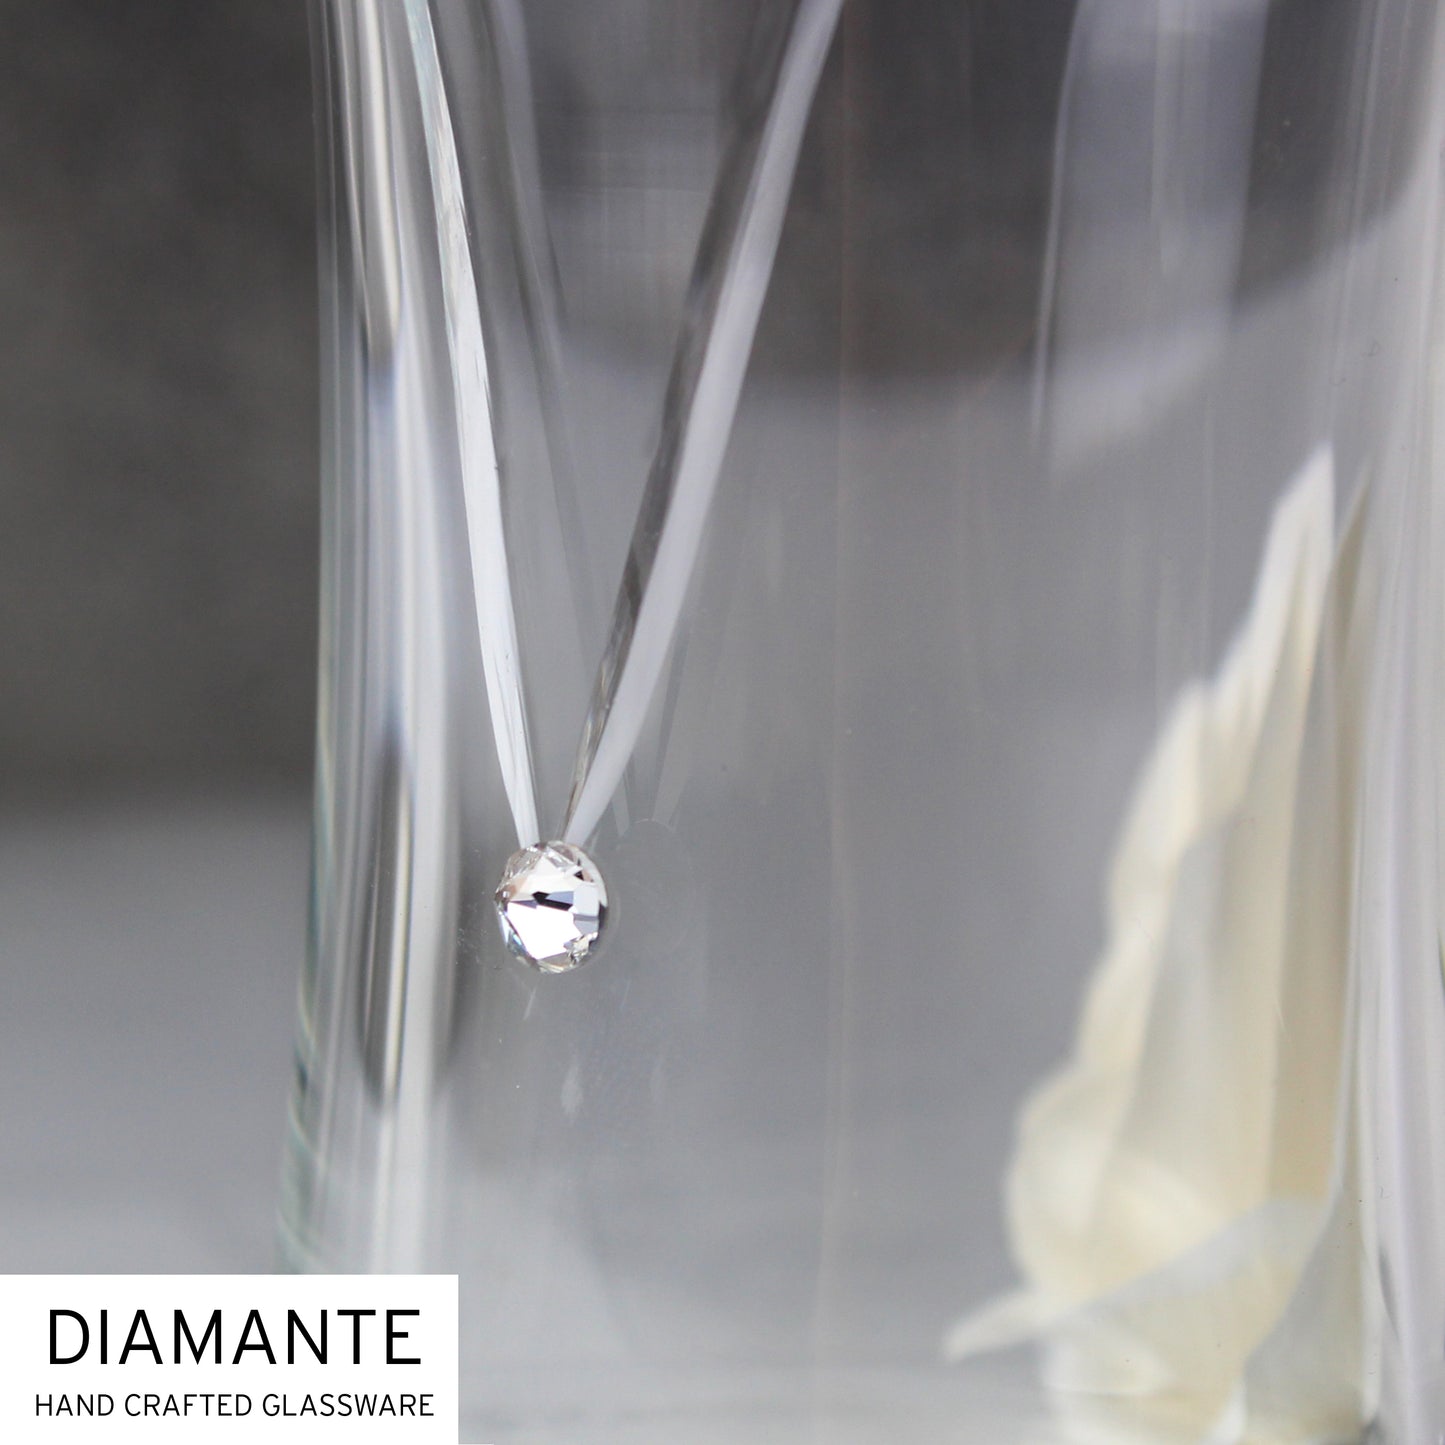 Personalised Wedding Mr & Mrs Hand Cut Diamante Heart Vase